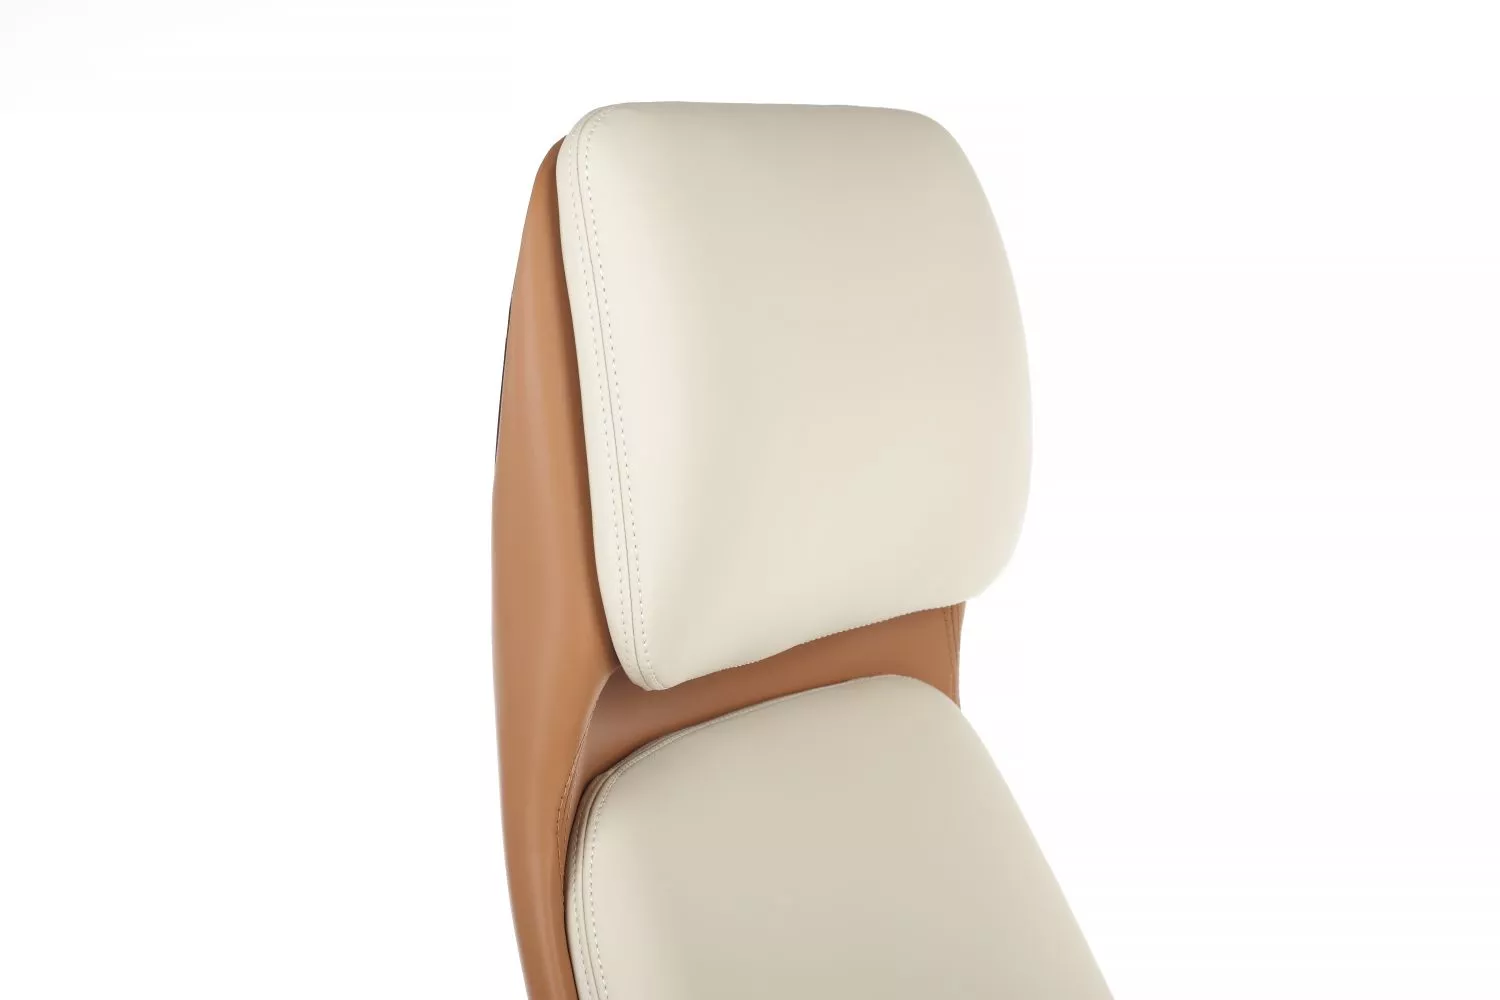 Компьютерное кресло натуральная кожа RIVA DESIGN Napoli (YZPN-YR020) бежевый / кэмел